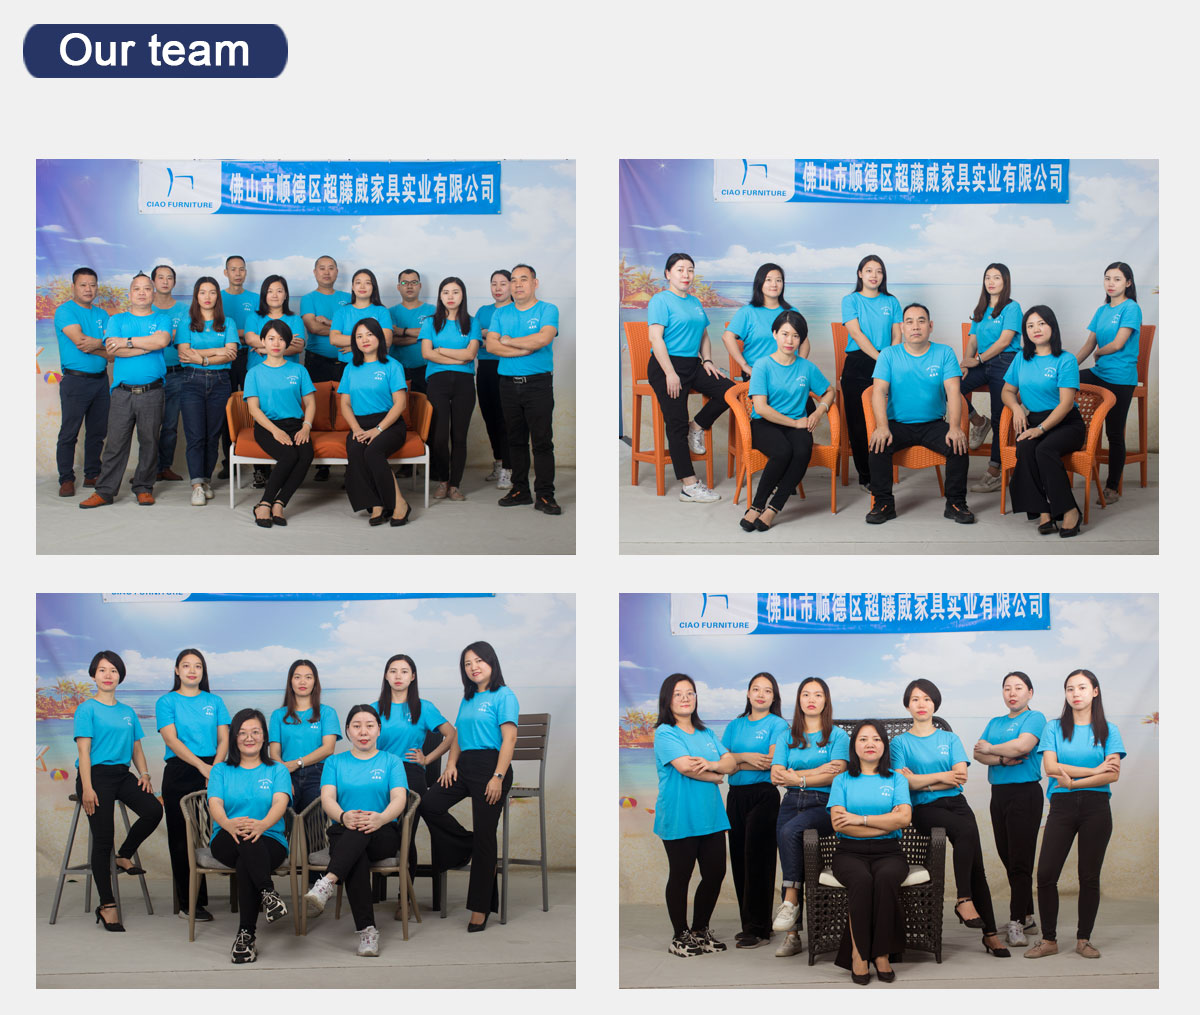 Photos of the company's team